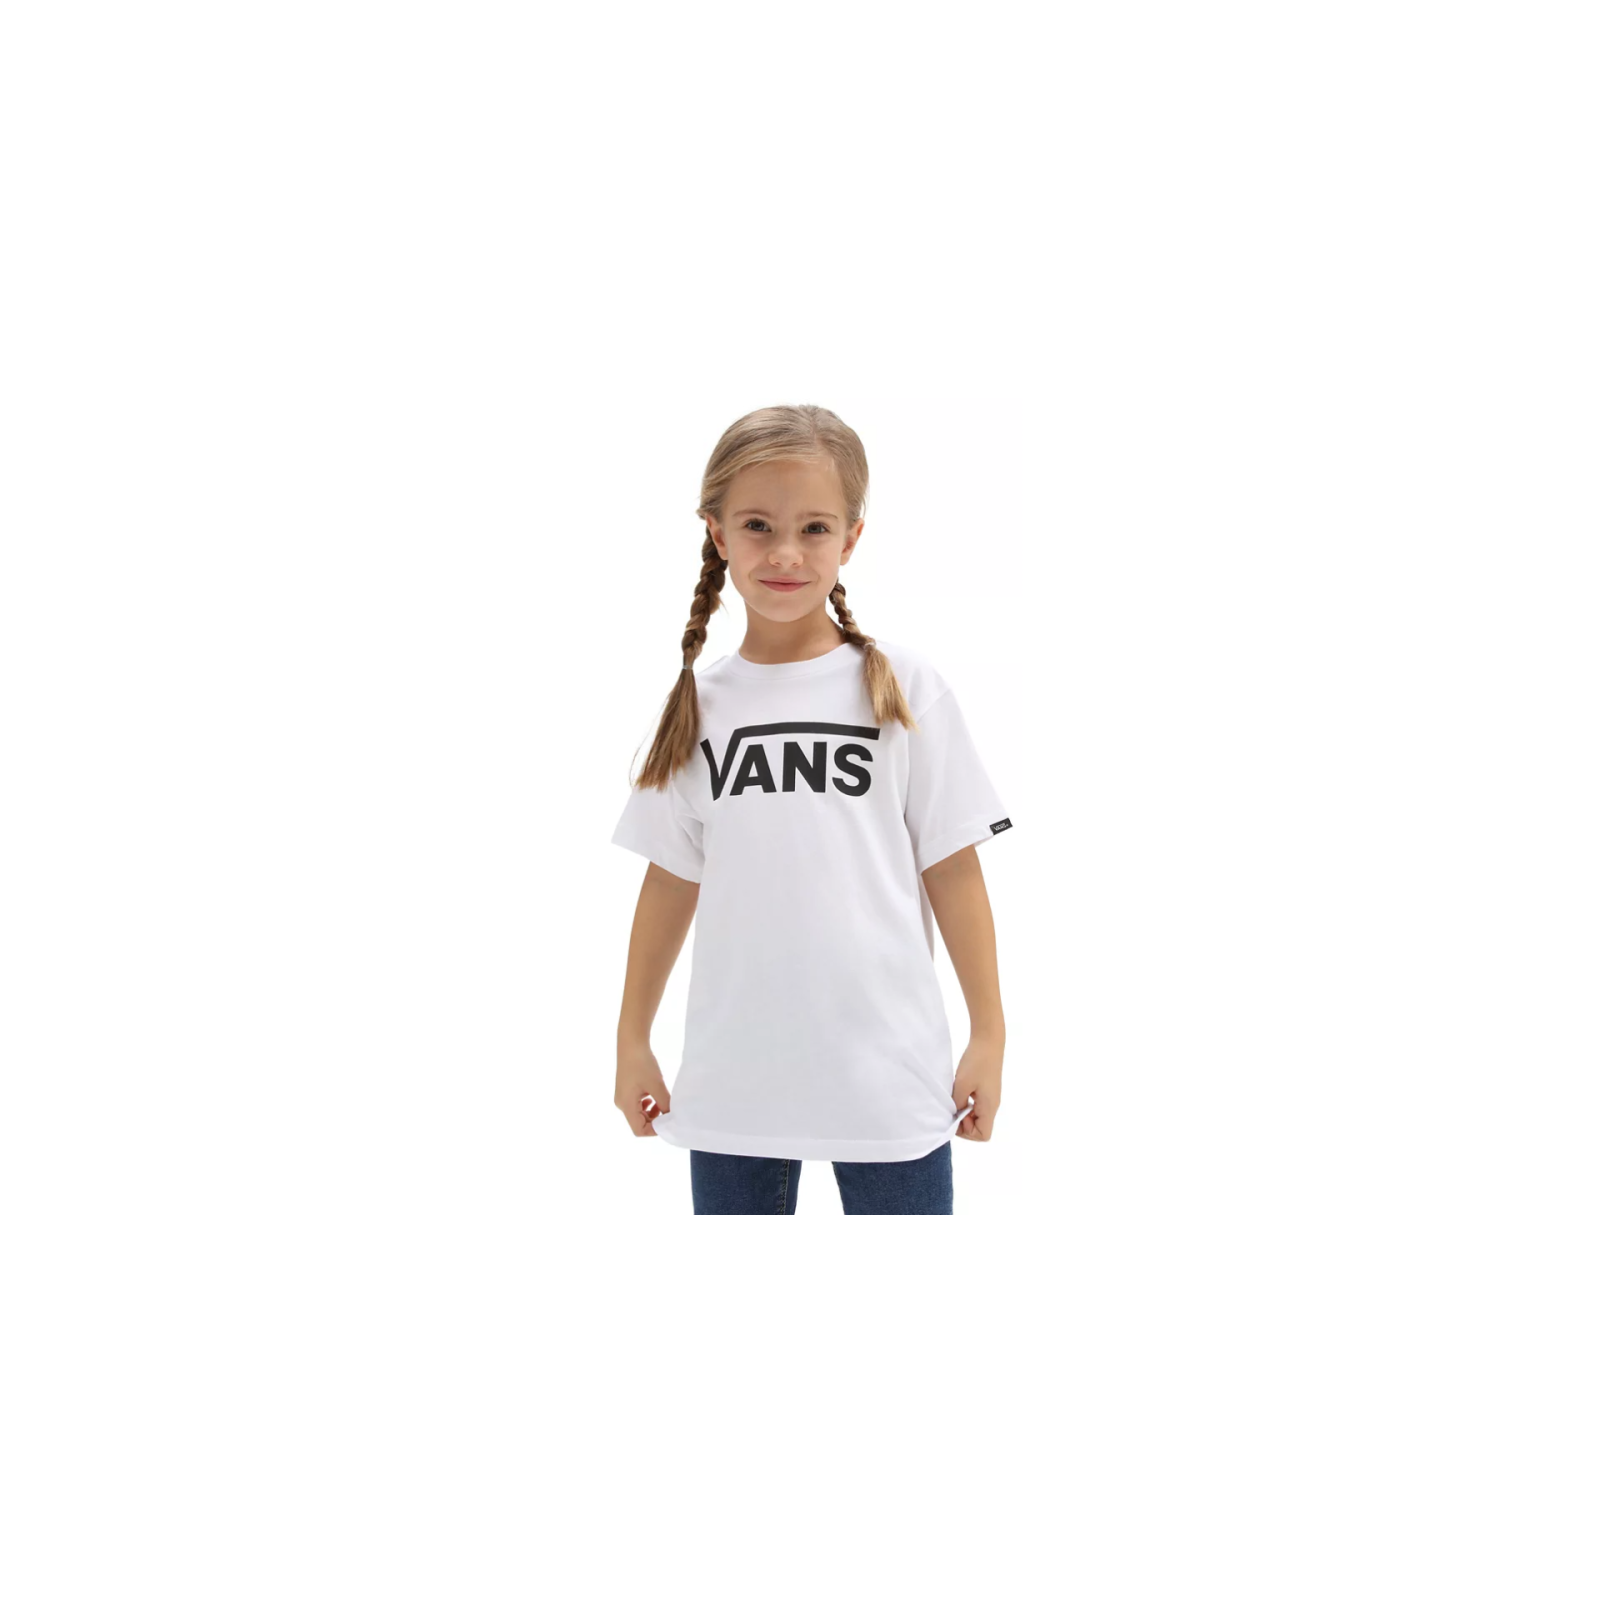 VANS CLASSIC KIDS T SHIRT WHITE BLACK 2 ANS - 7 ANS